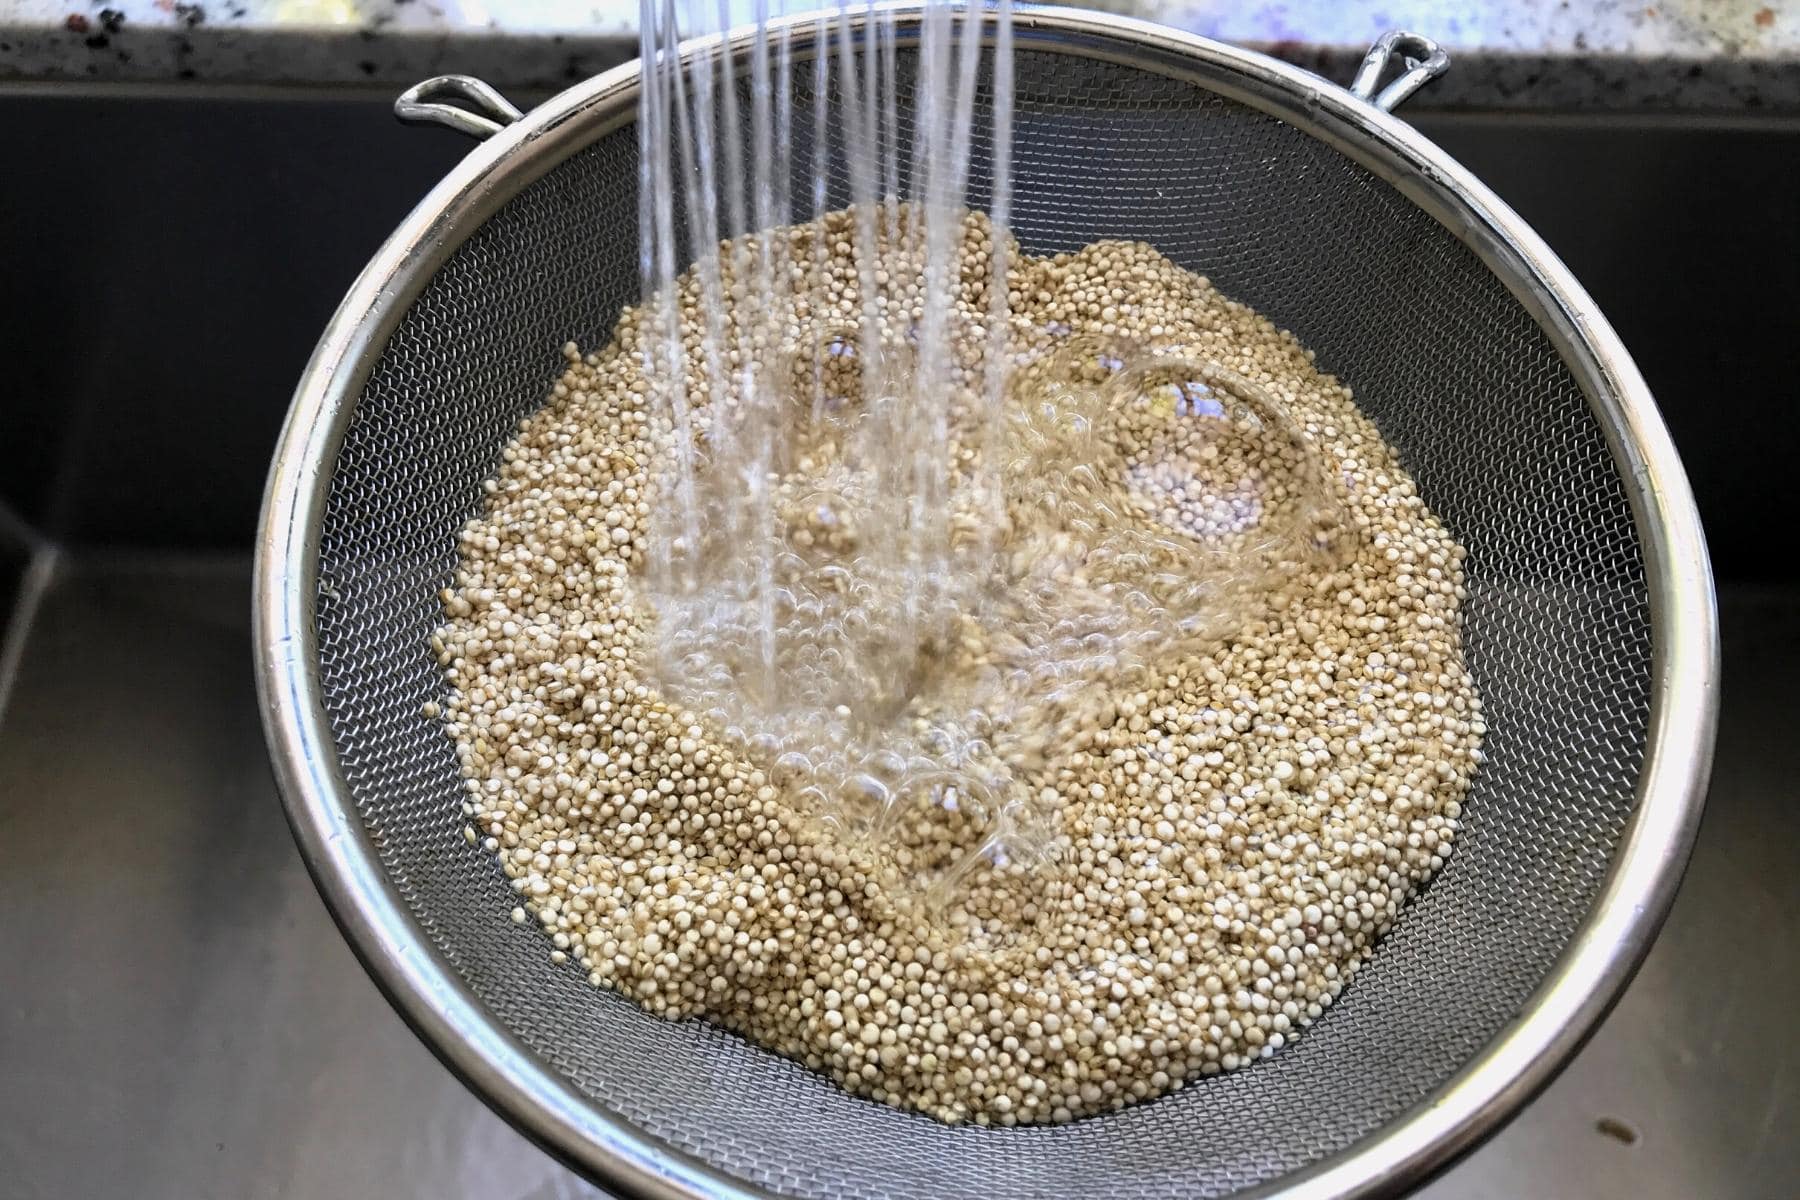 Rinsing quinoa in a fine mesh sieve